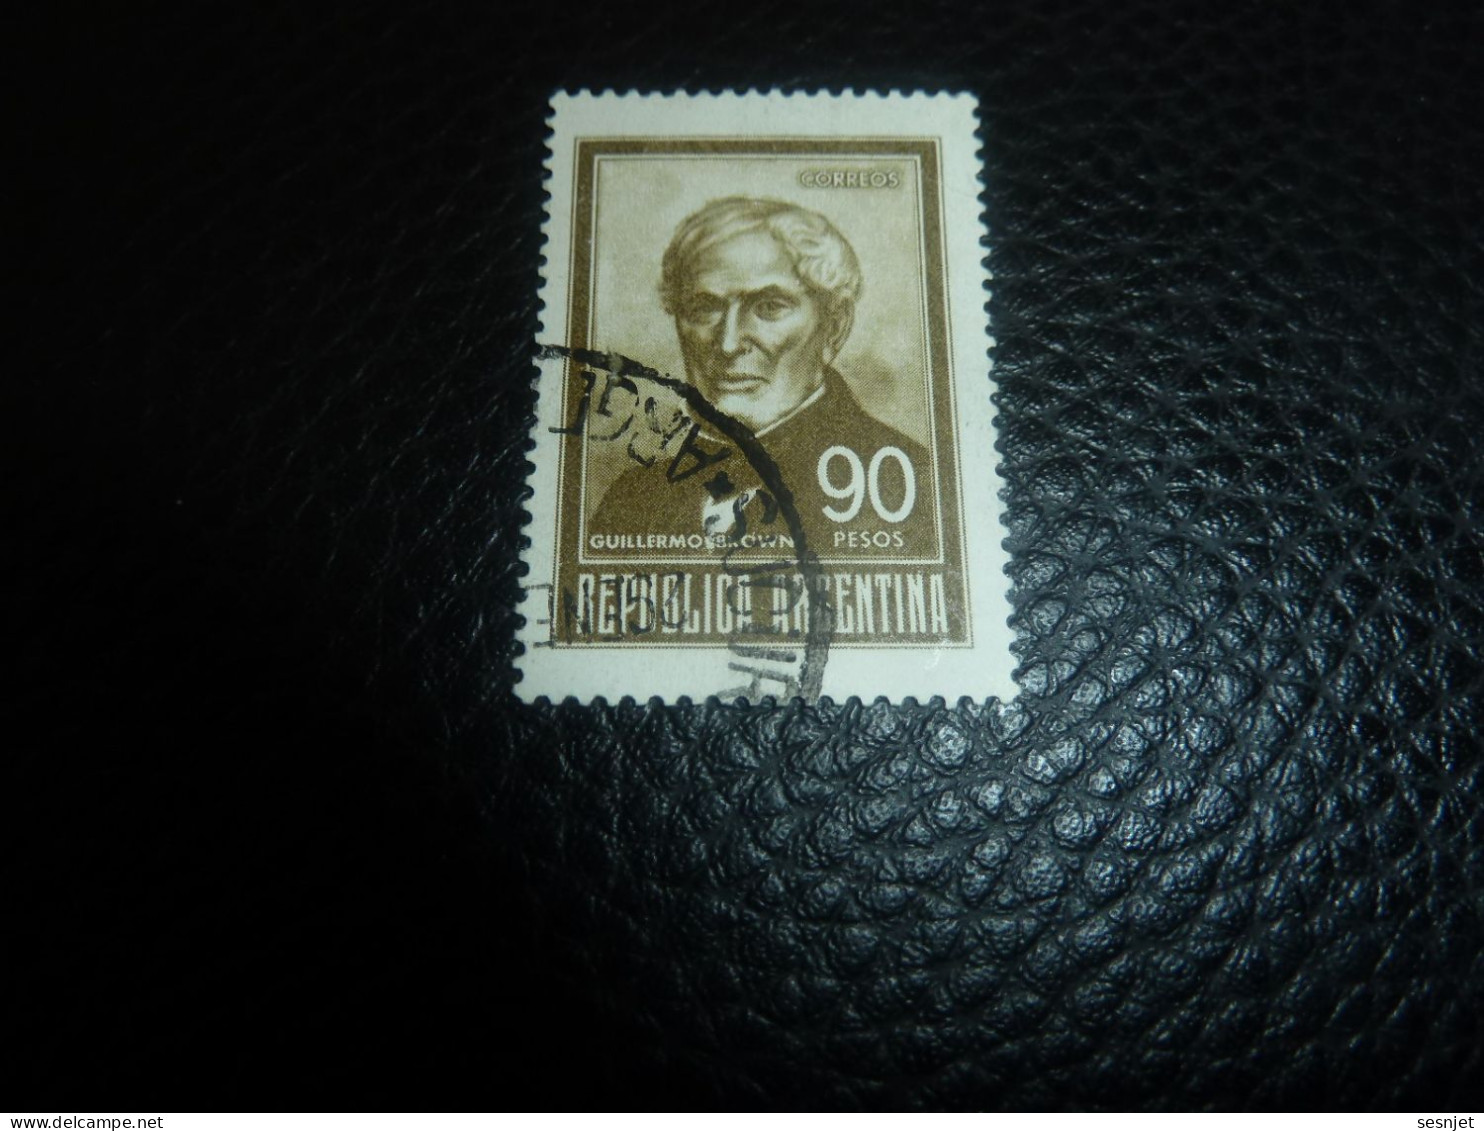 Republica Argentina - Guillermo Brown (1777-1857) - 90 Pesos - Yt 783 - Brun - Oblitéré - Année 1967 - - Used Stamps